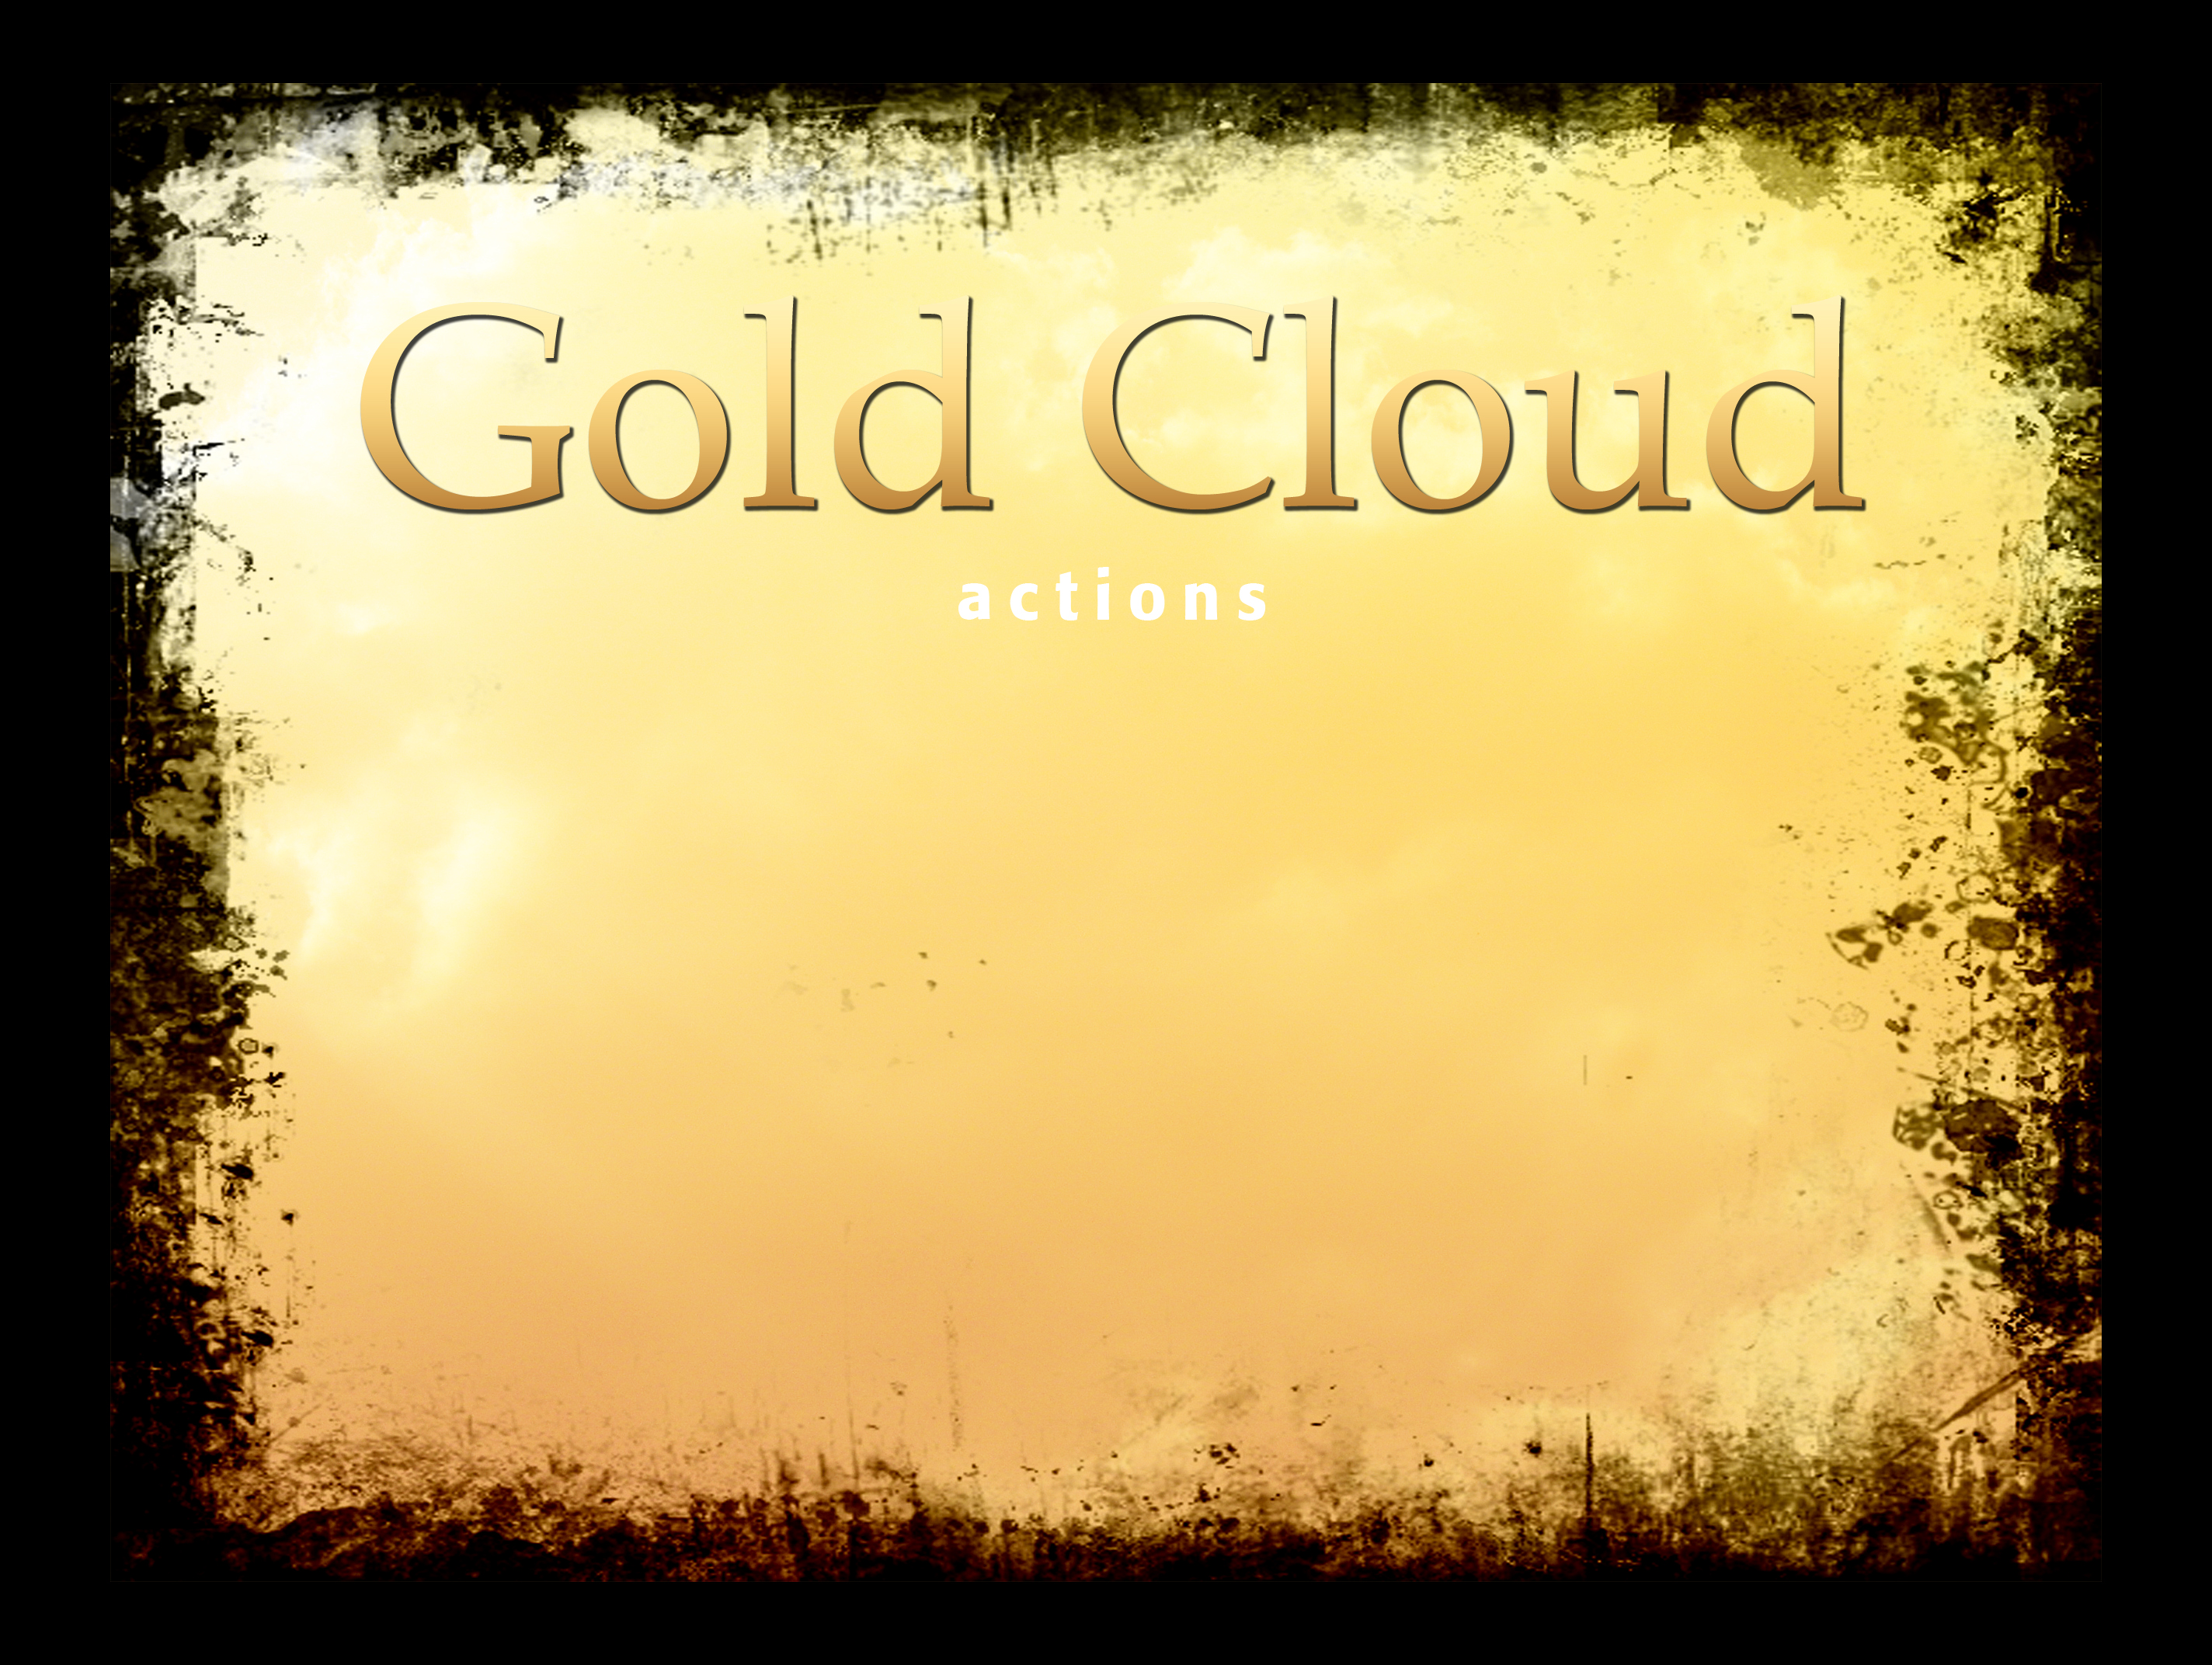 Gold Cloud Actions